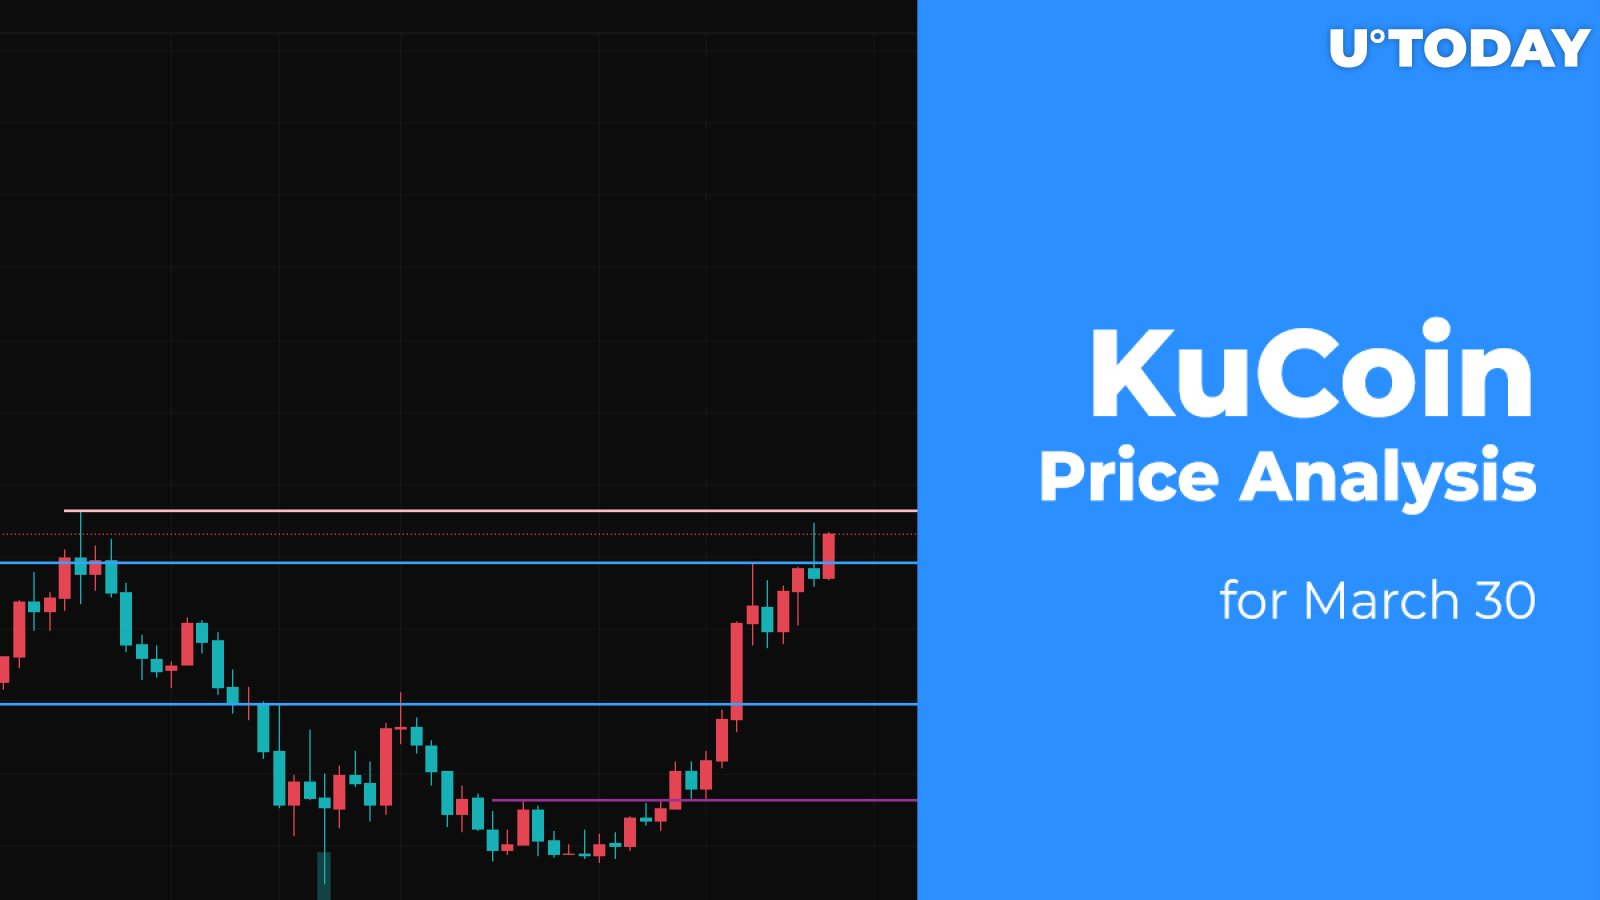 KuCoin Token (KCS) Price Analysis for March 30